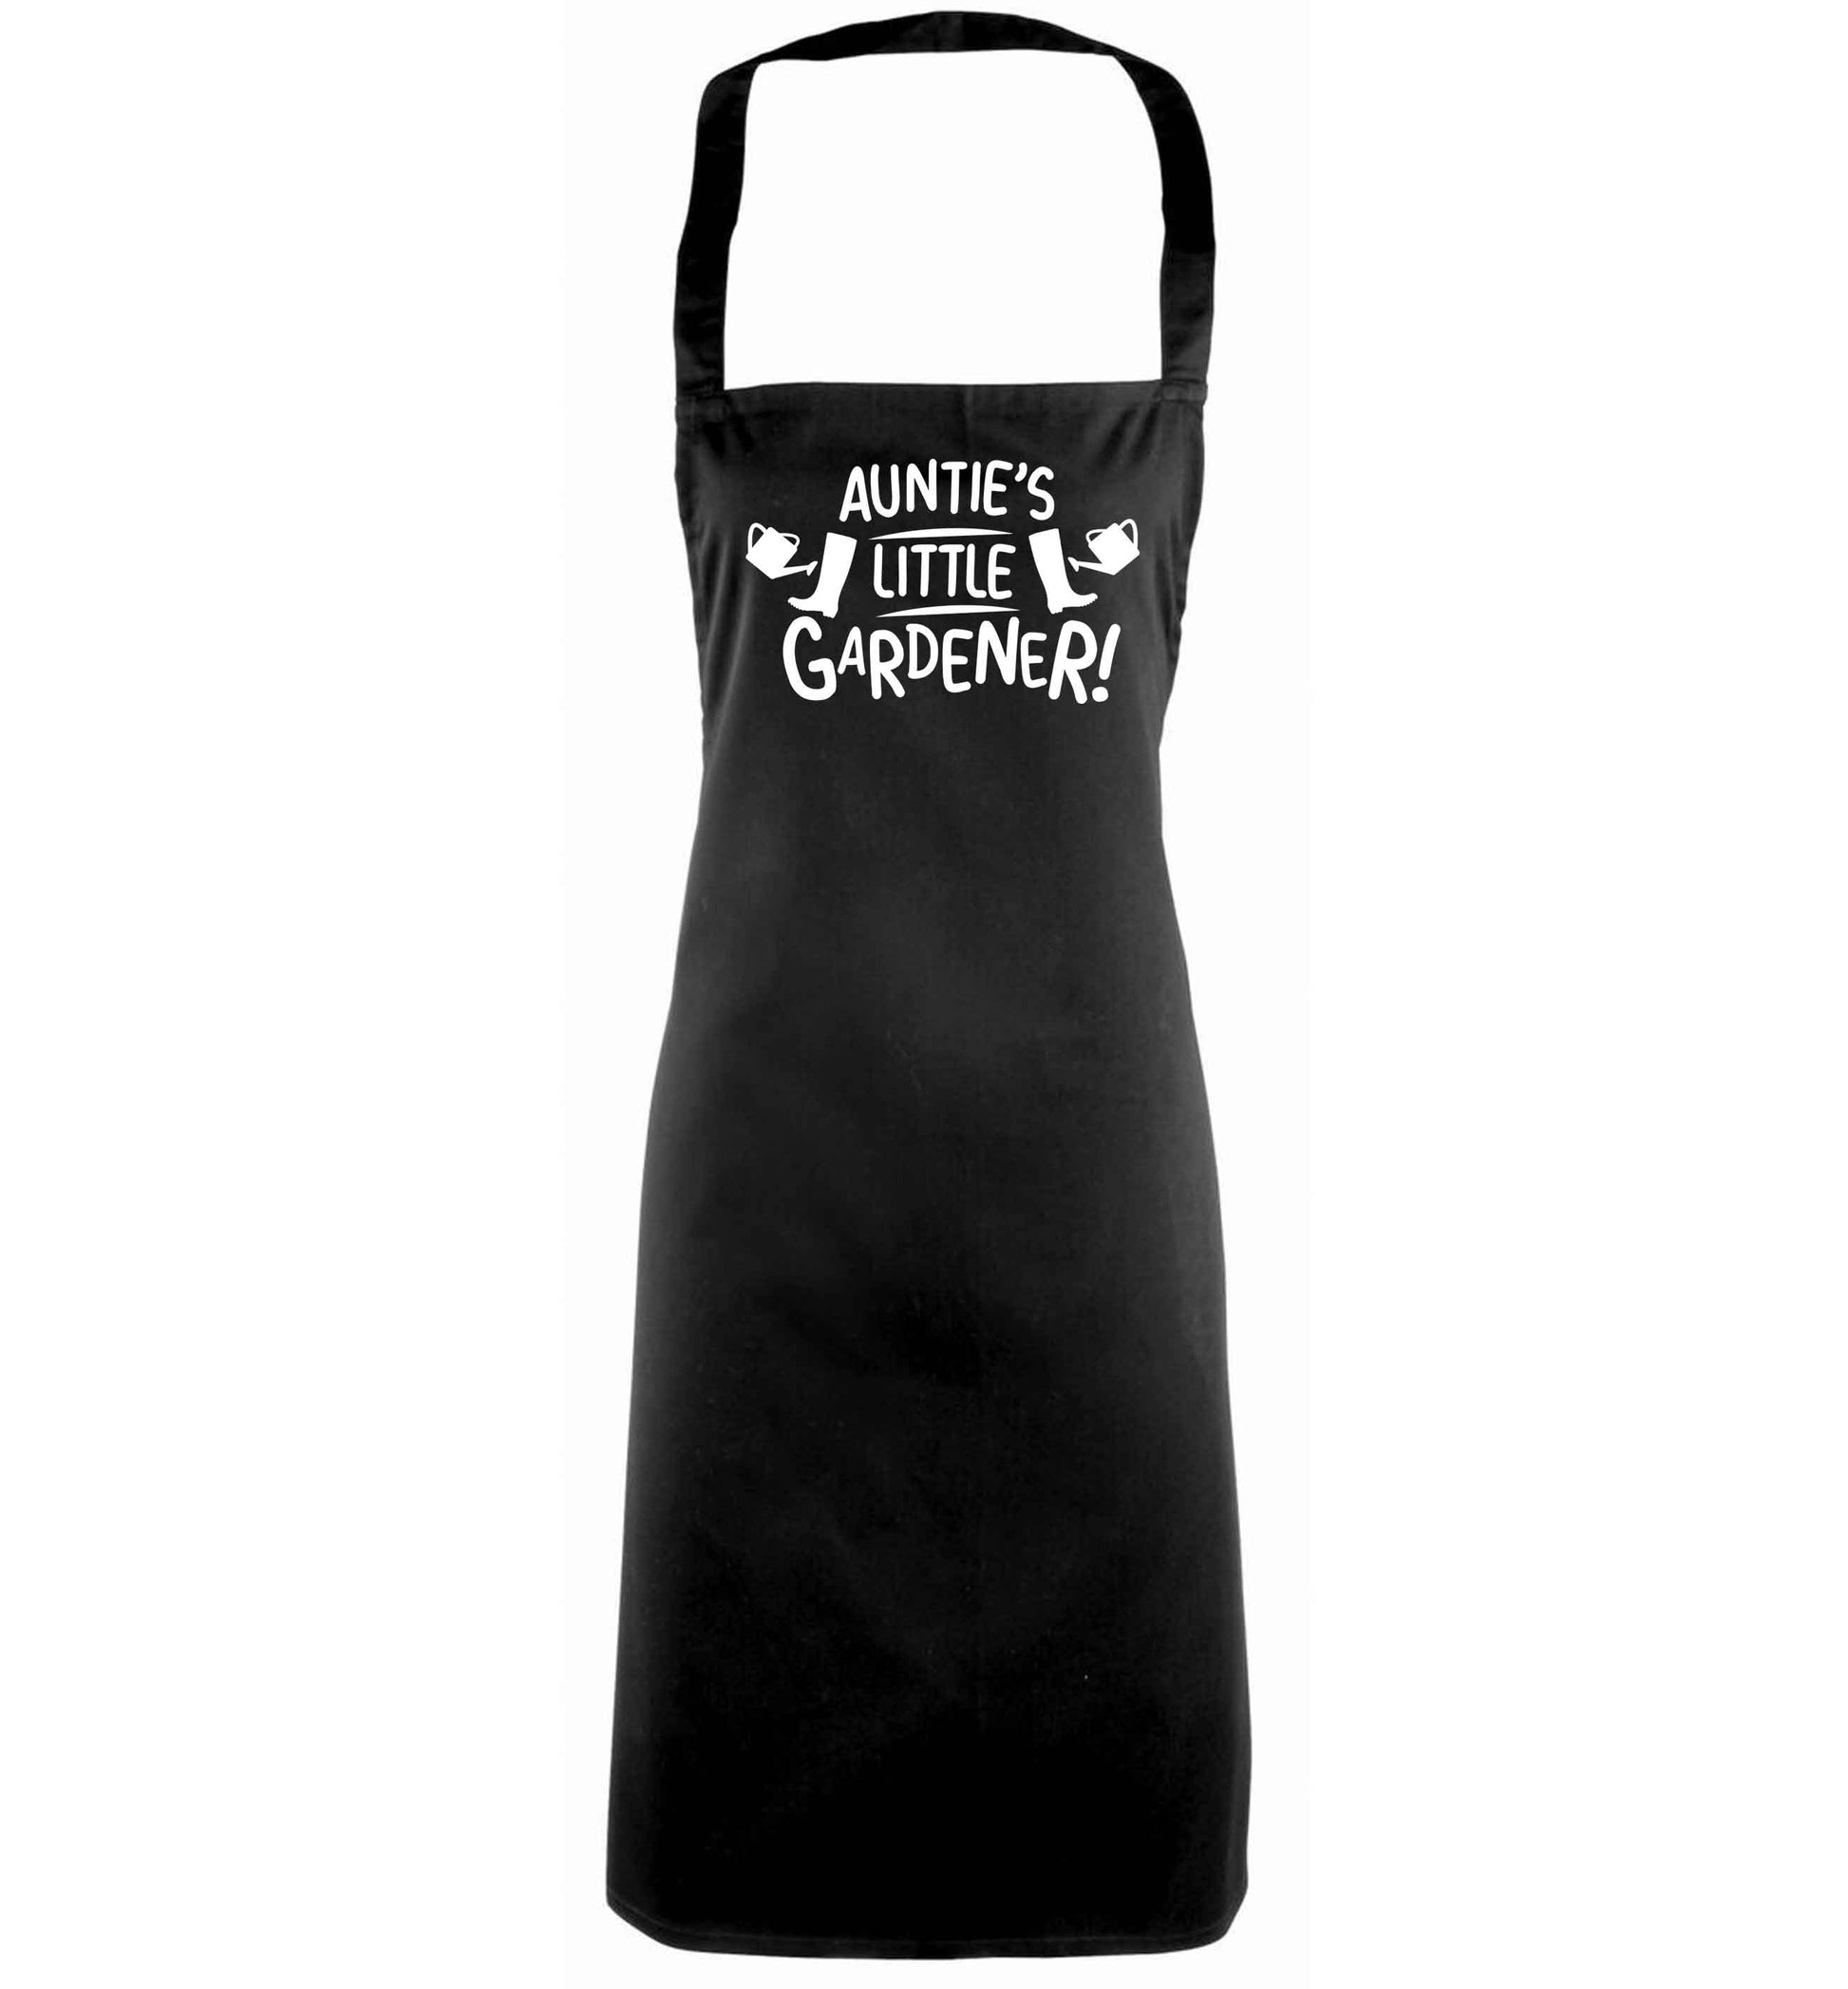 Auntie's little gardener black apron